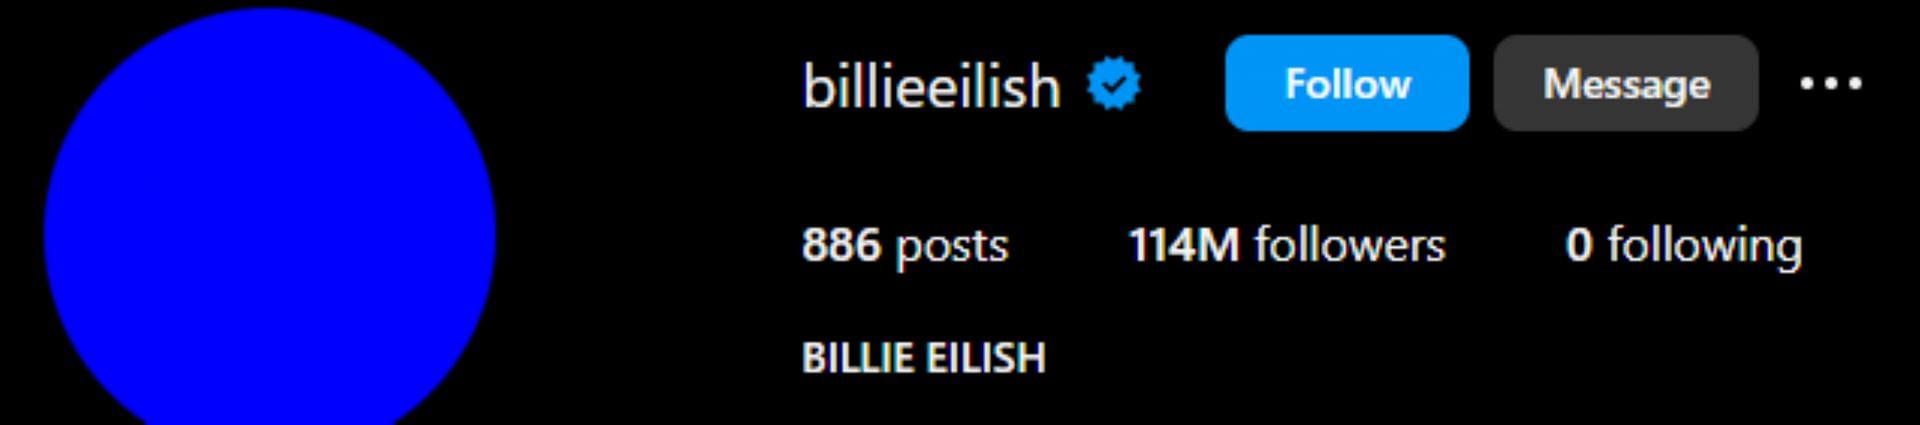 Billie Eilish changes her Instagram profile picture to a blue circle (Image via billieeilish/Instagram)